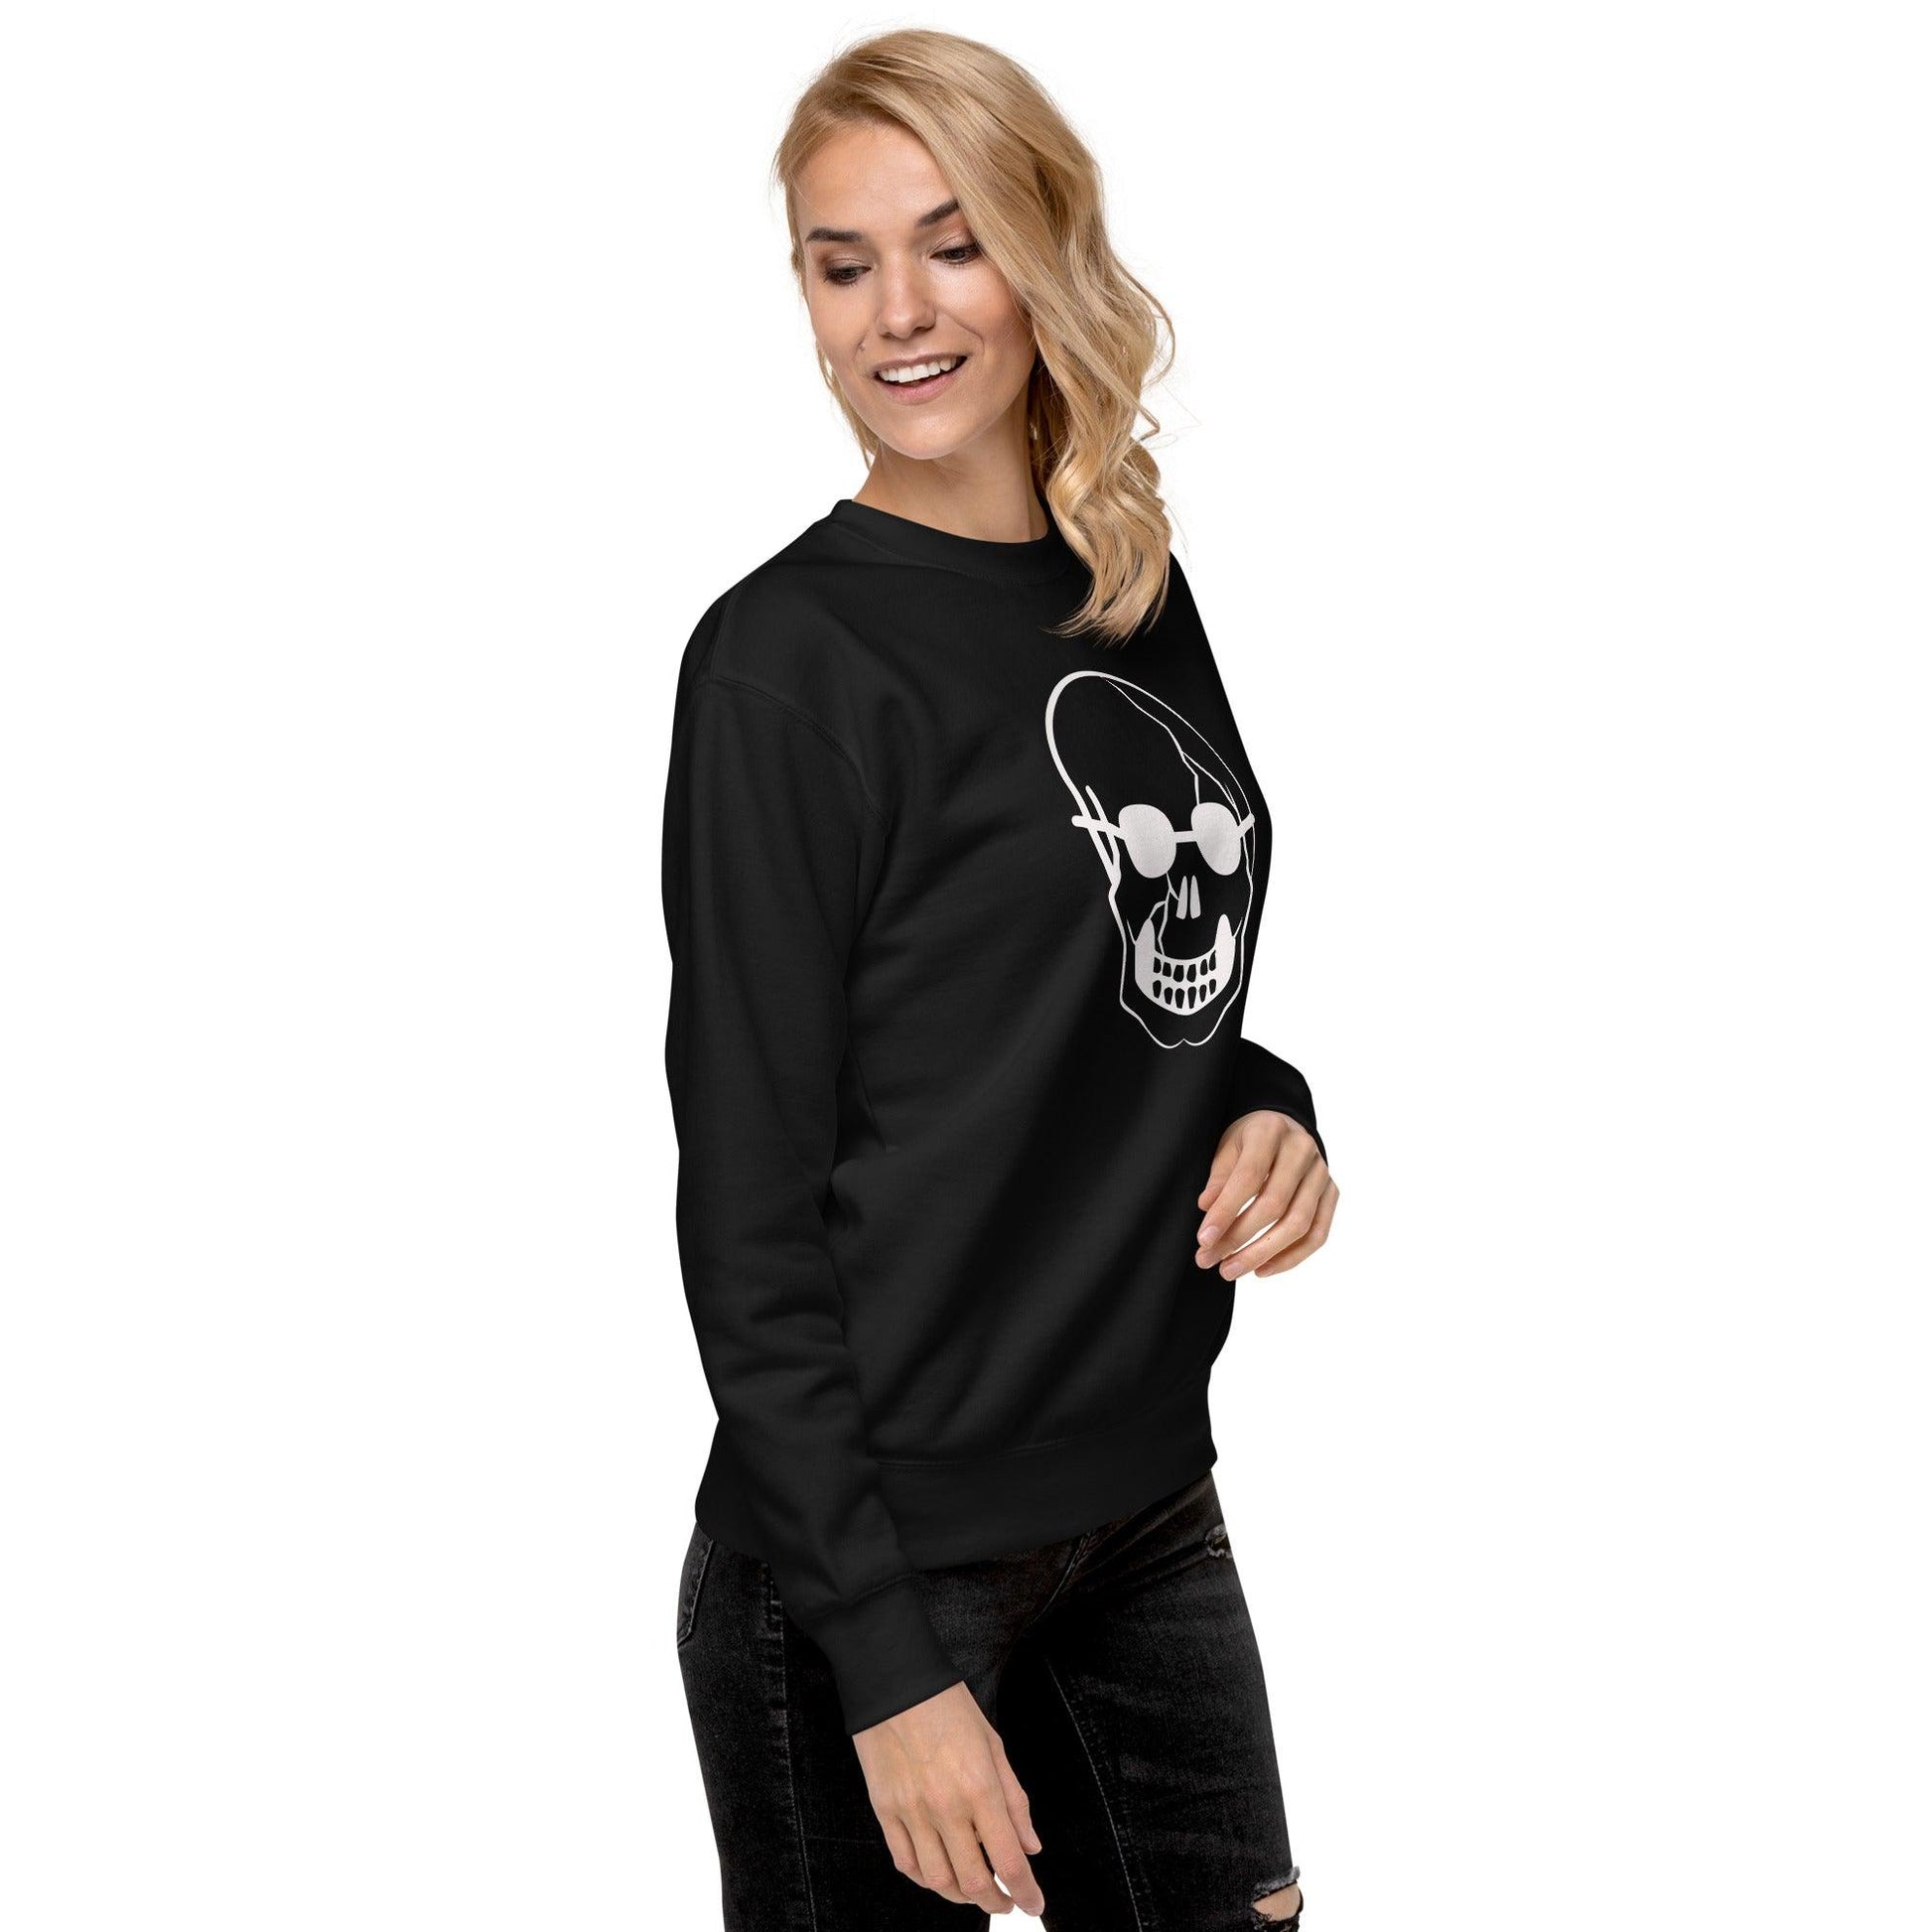 White Skull With Shades Unisex Premium Sweatshirt - Lizard Vigilante